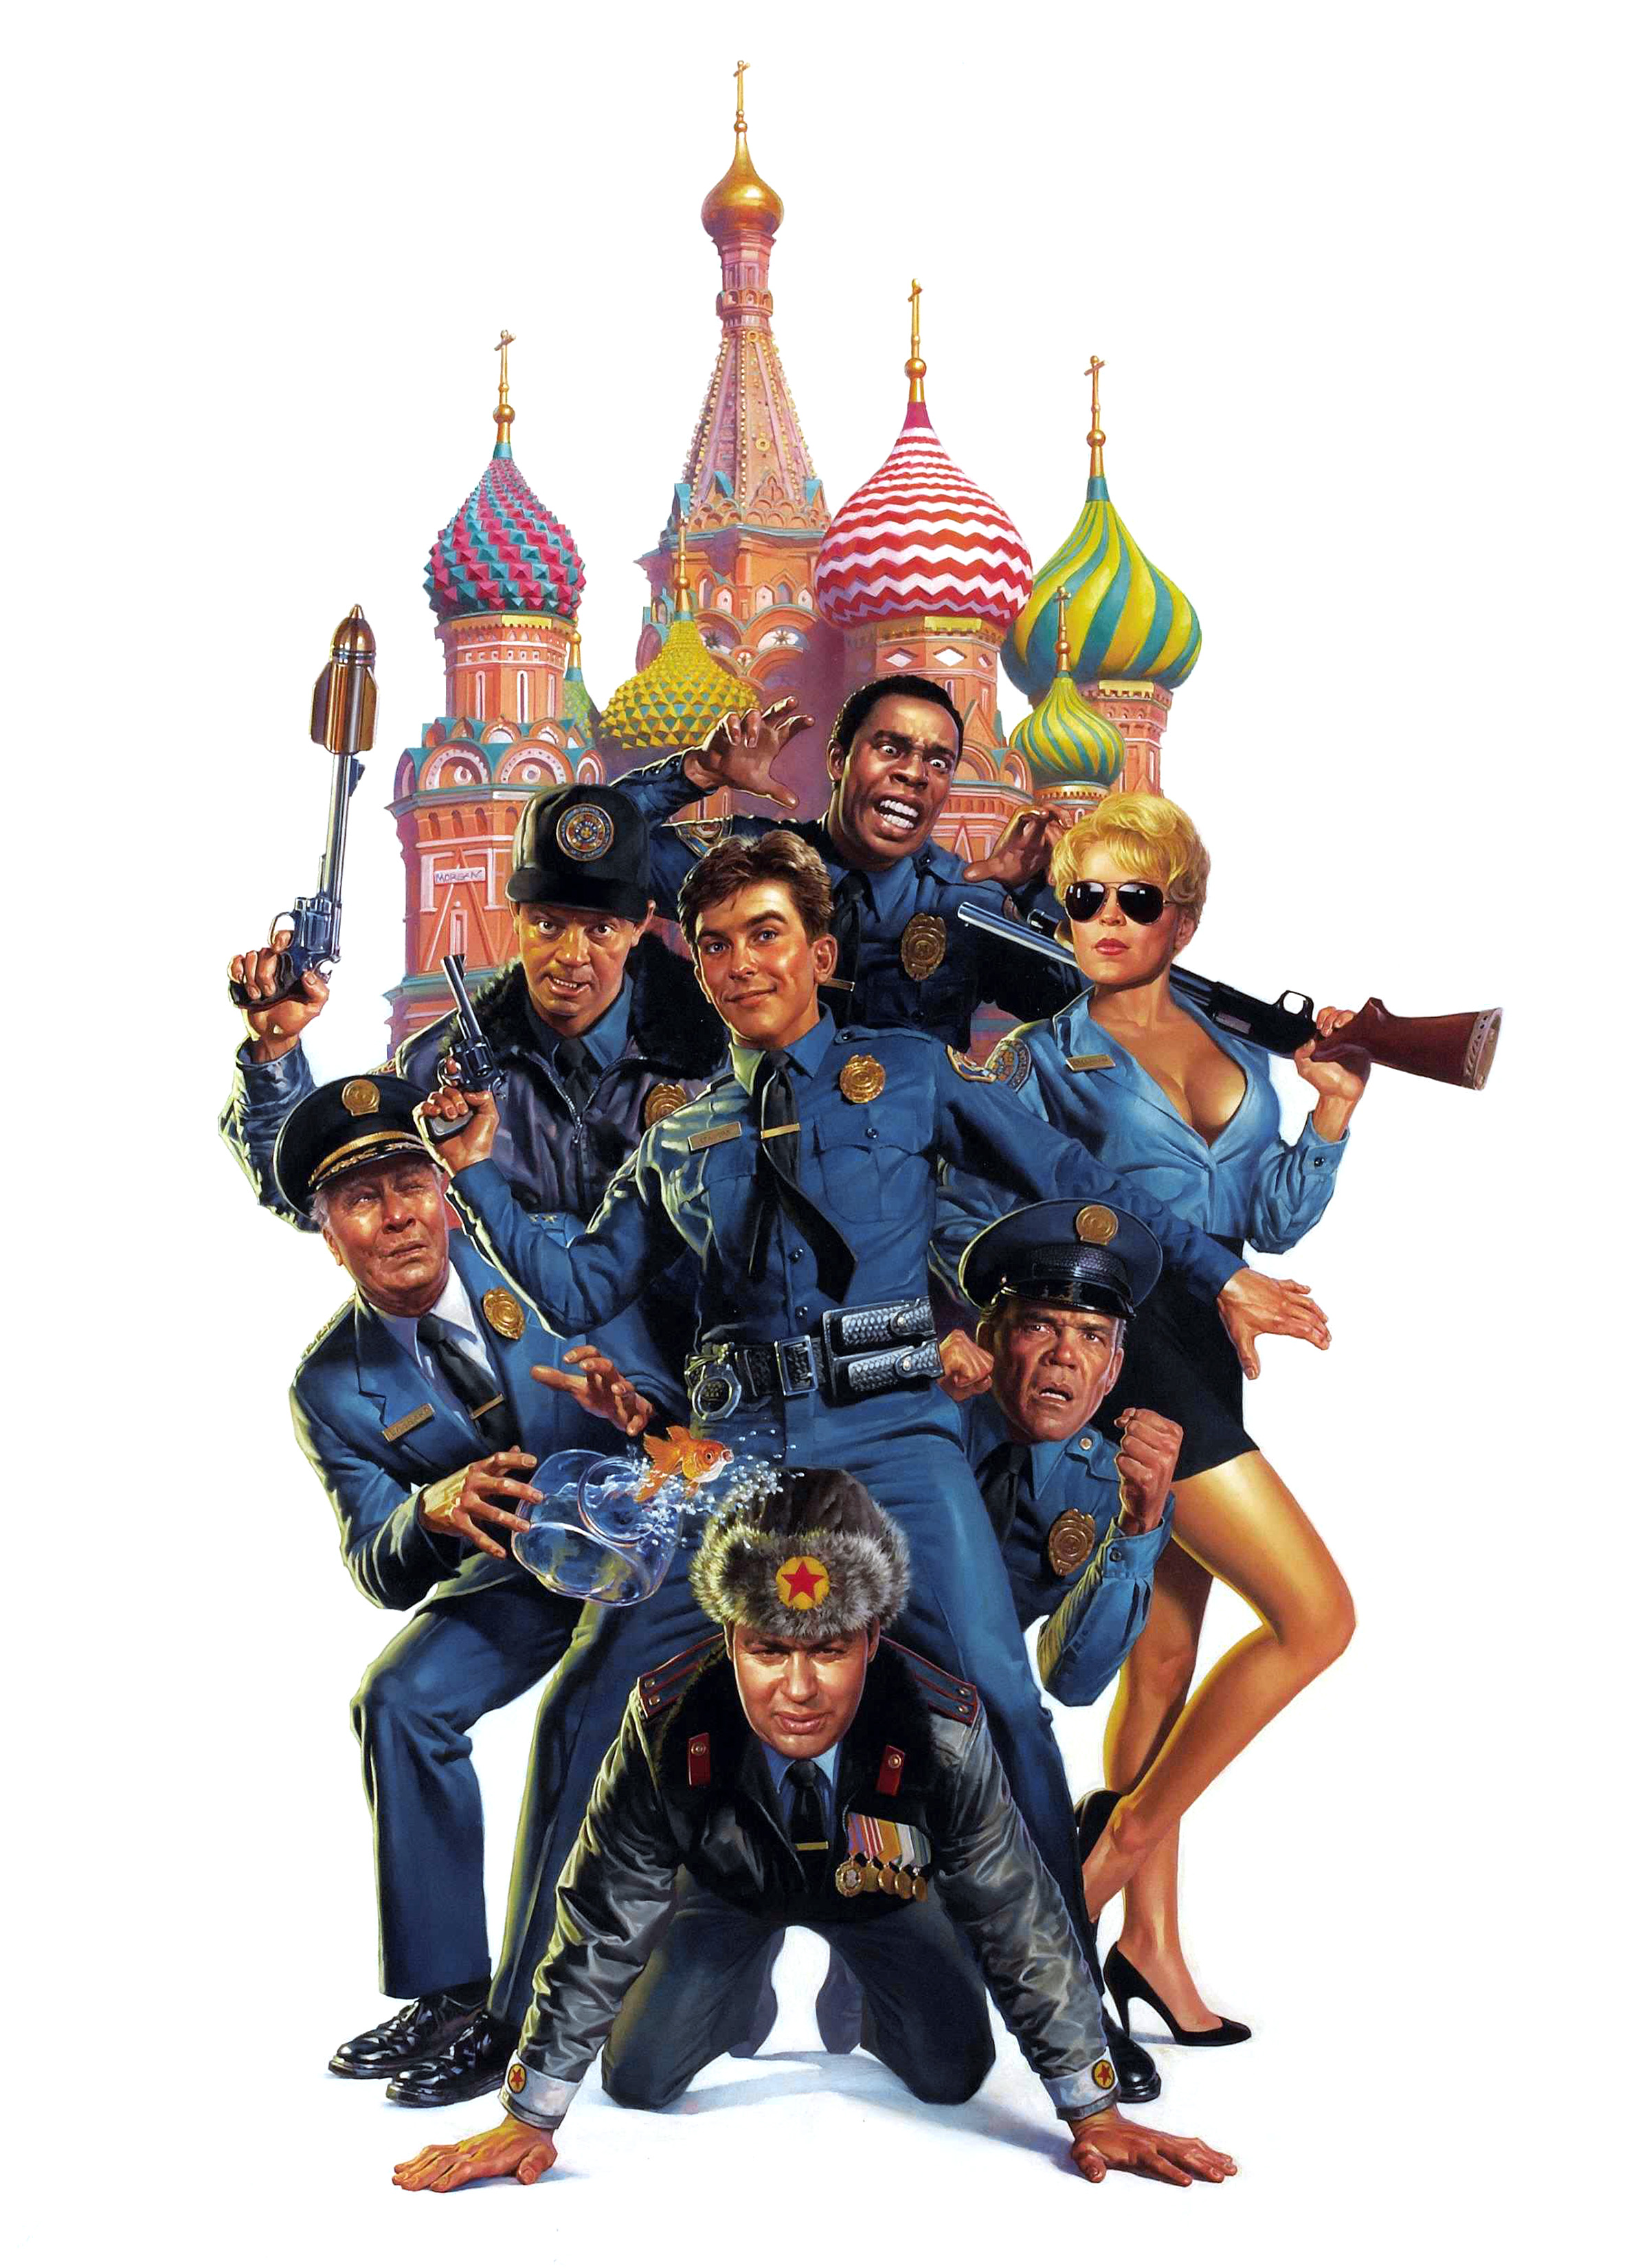 Police Academy 1 7 Complete Movies Collection Blu Ray Box Set ASIN B00F40UBM8–dvdbash 23